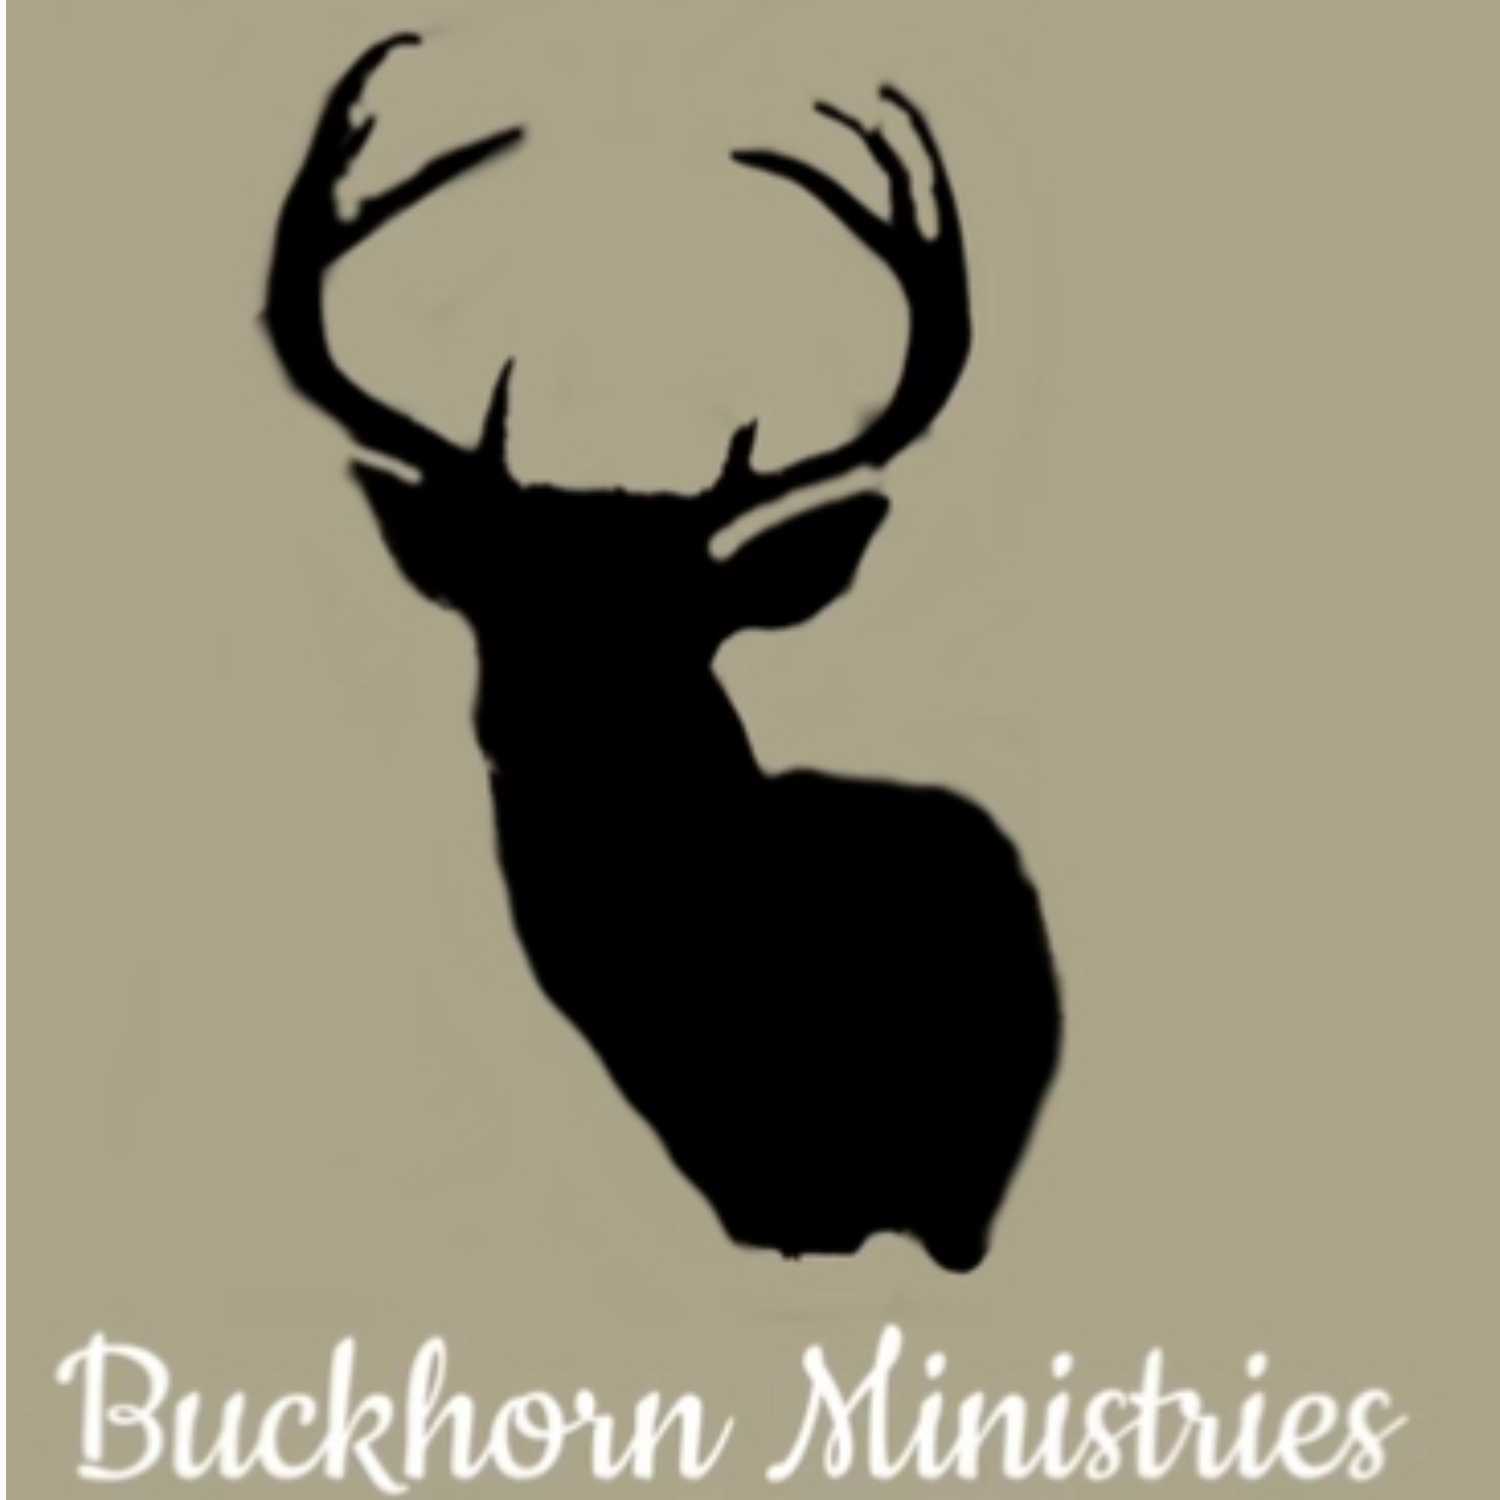 Buckhorn Ministries Outdoorshow